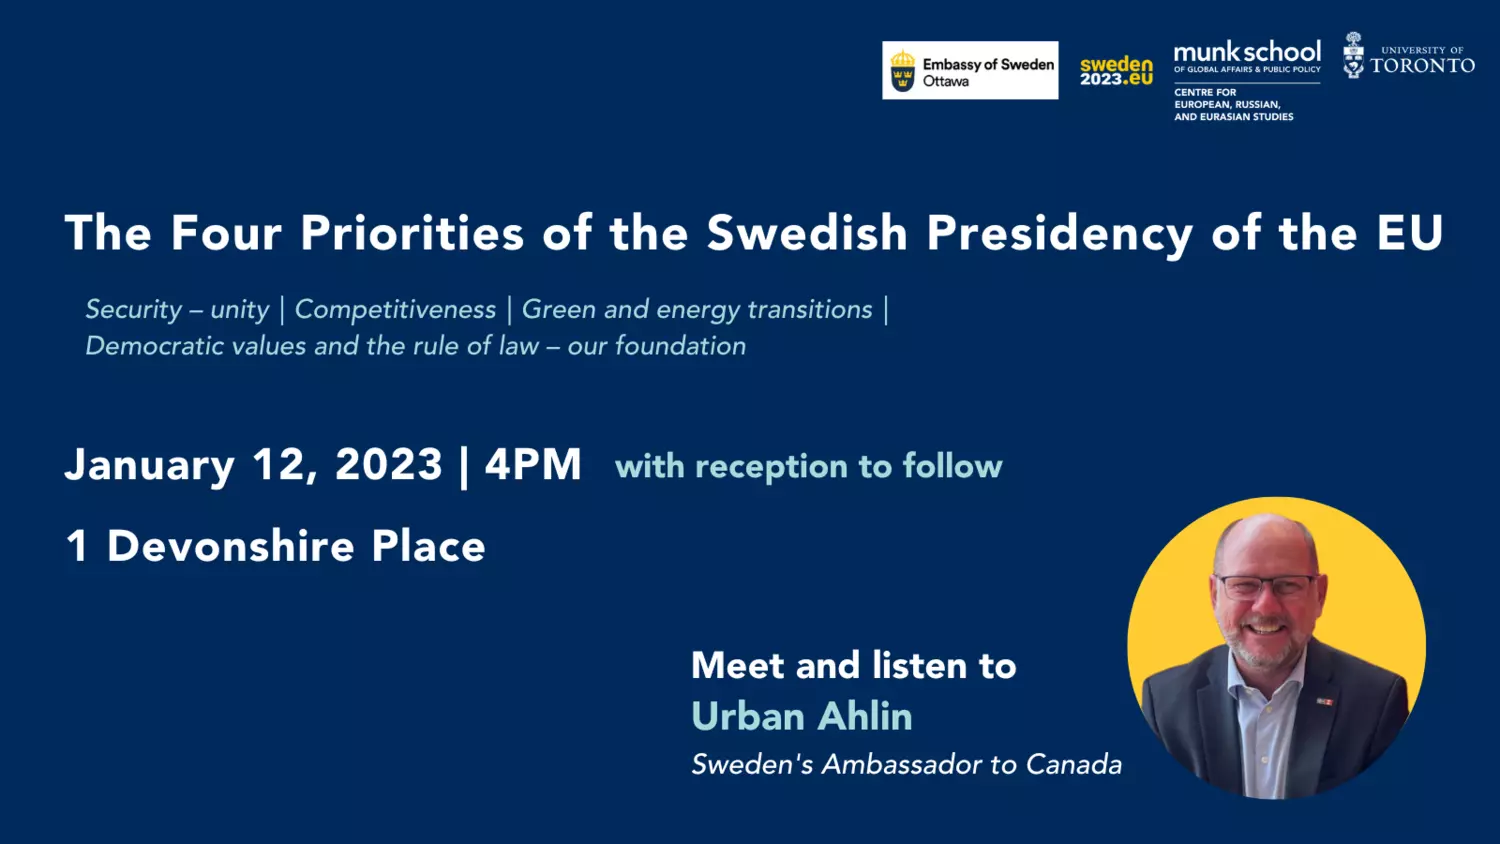 12 Jan: Meet and listen to Urban Ahlin, Sweden’s Ambassador to Canada 